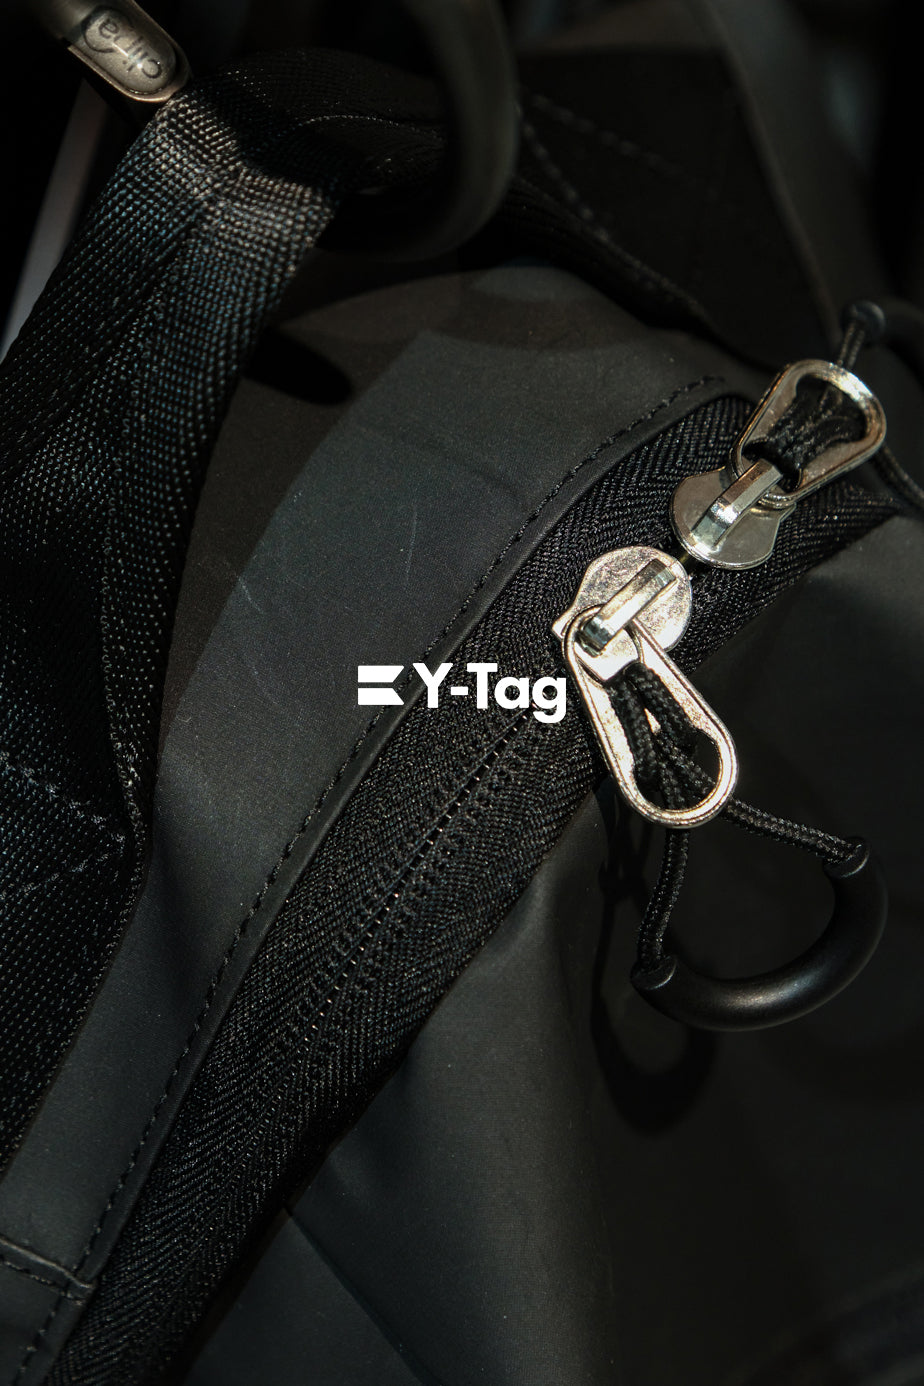 Y-Tag Arc-back pack